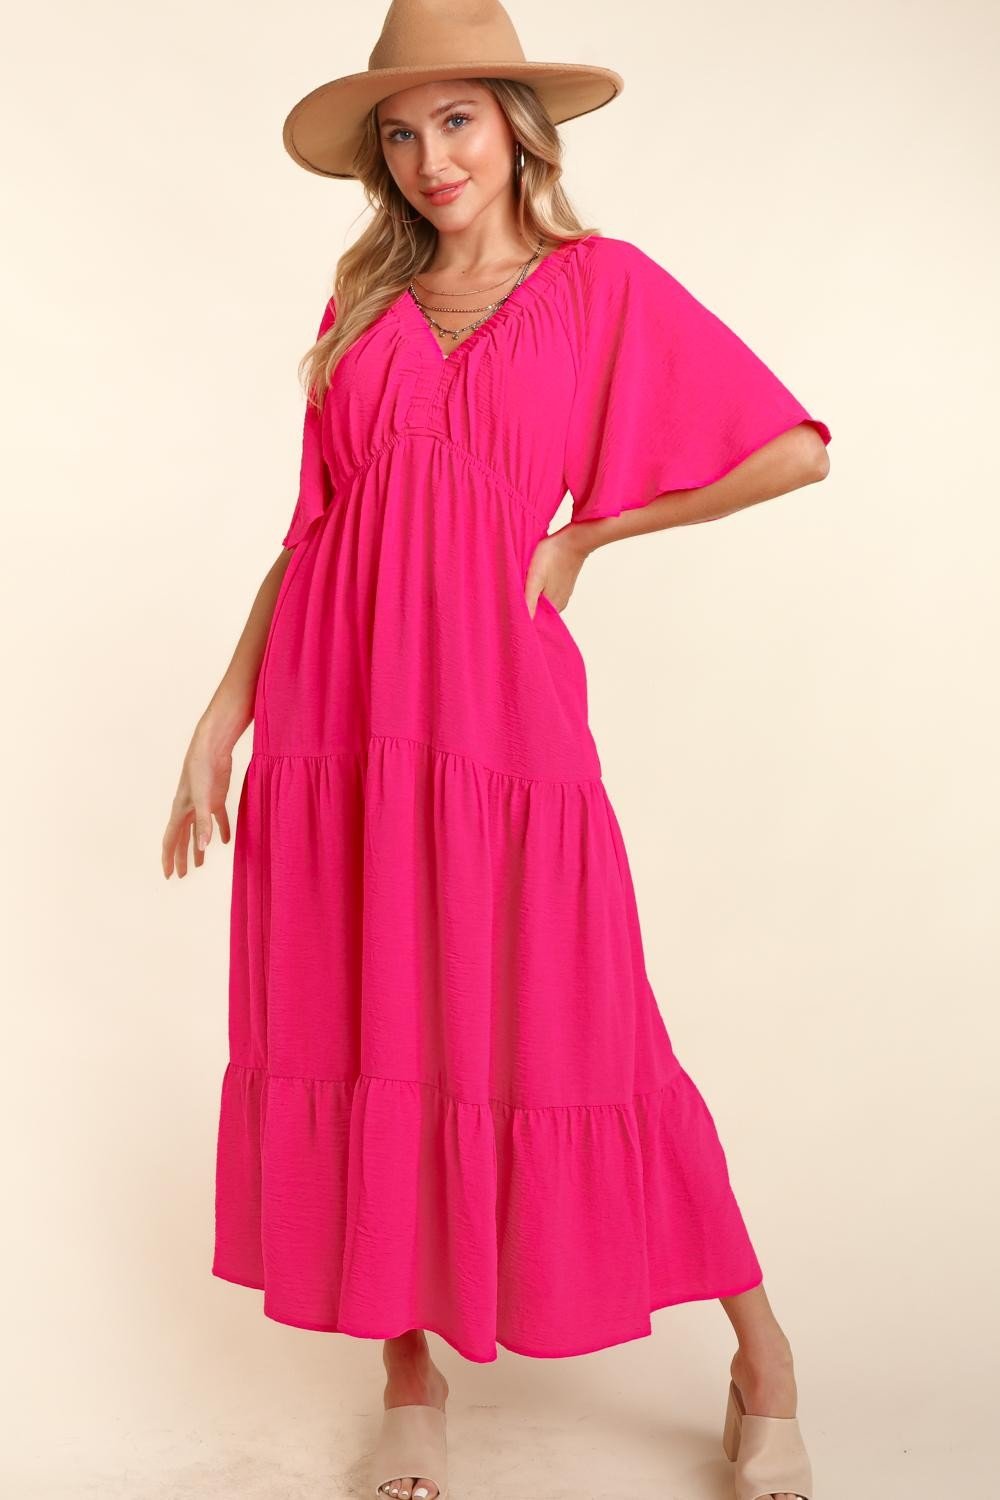 Tiered Babydoll Maxi Dress with Pockets in Hot PinkMaxi DressHaptics